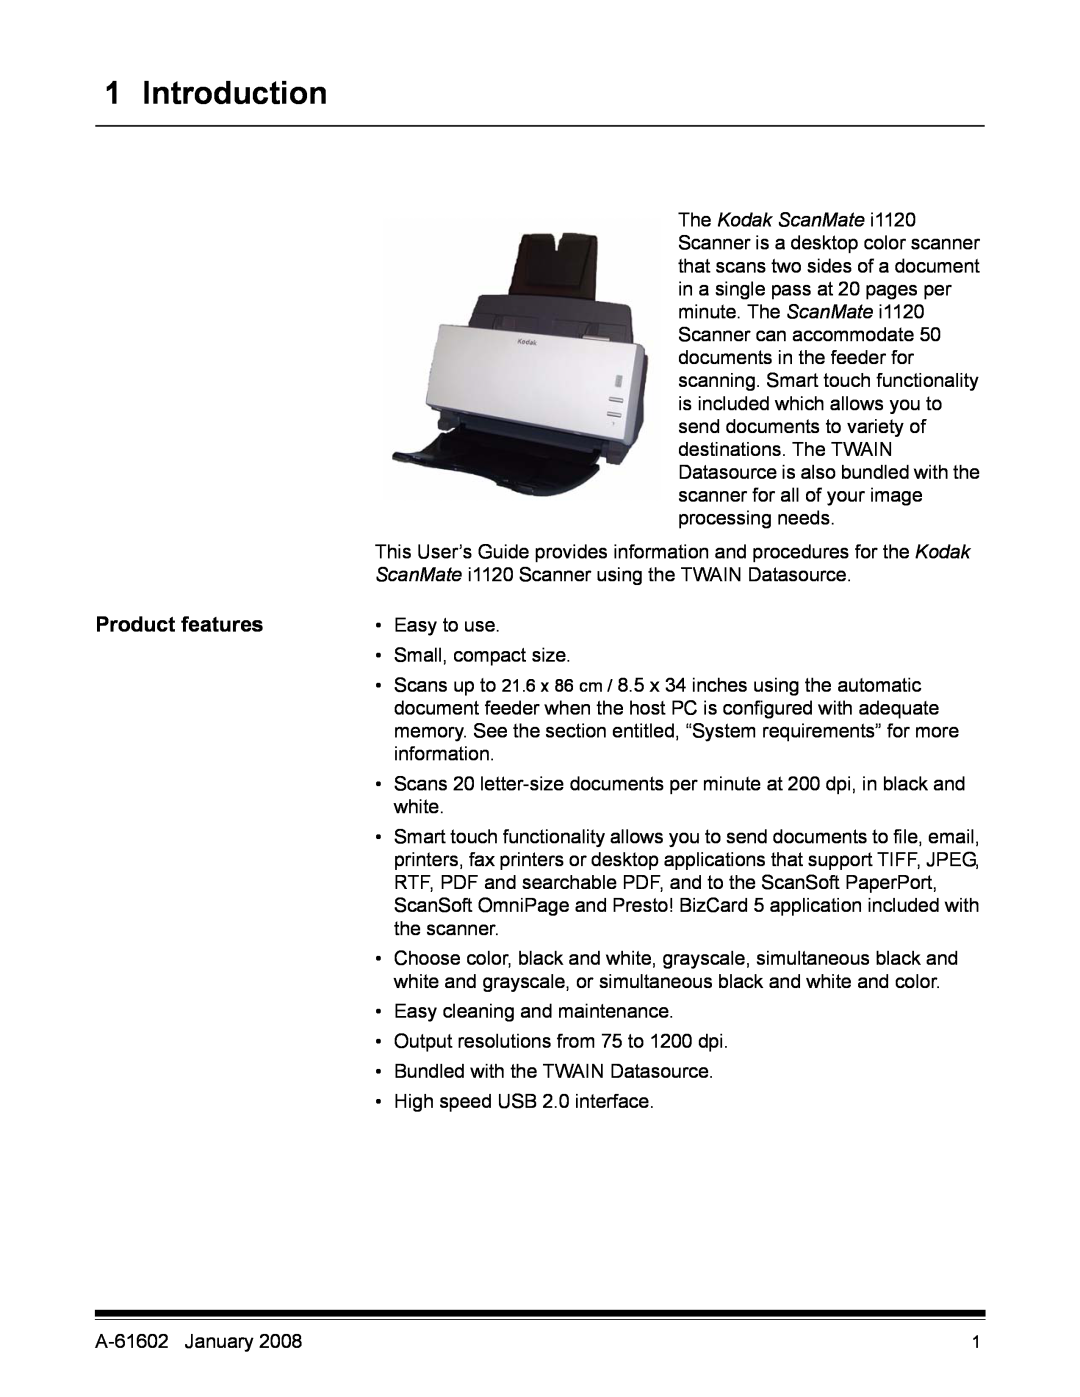 Kodak A-61602 manual Introduction, Product features 